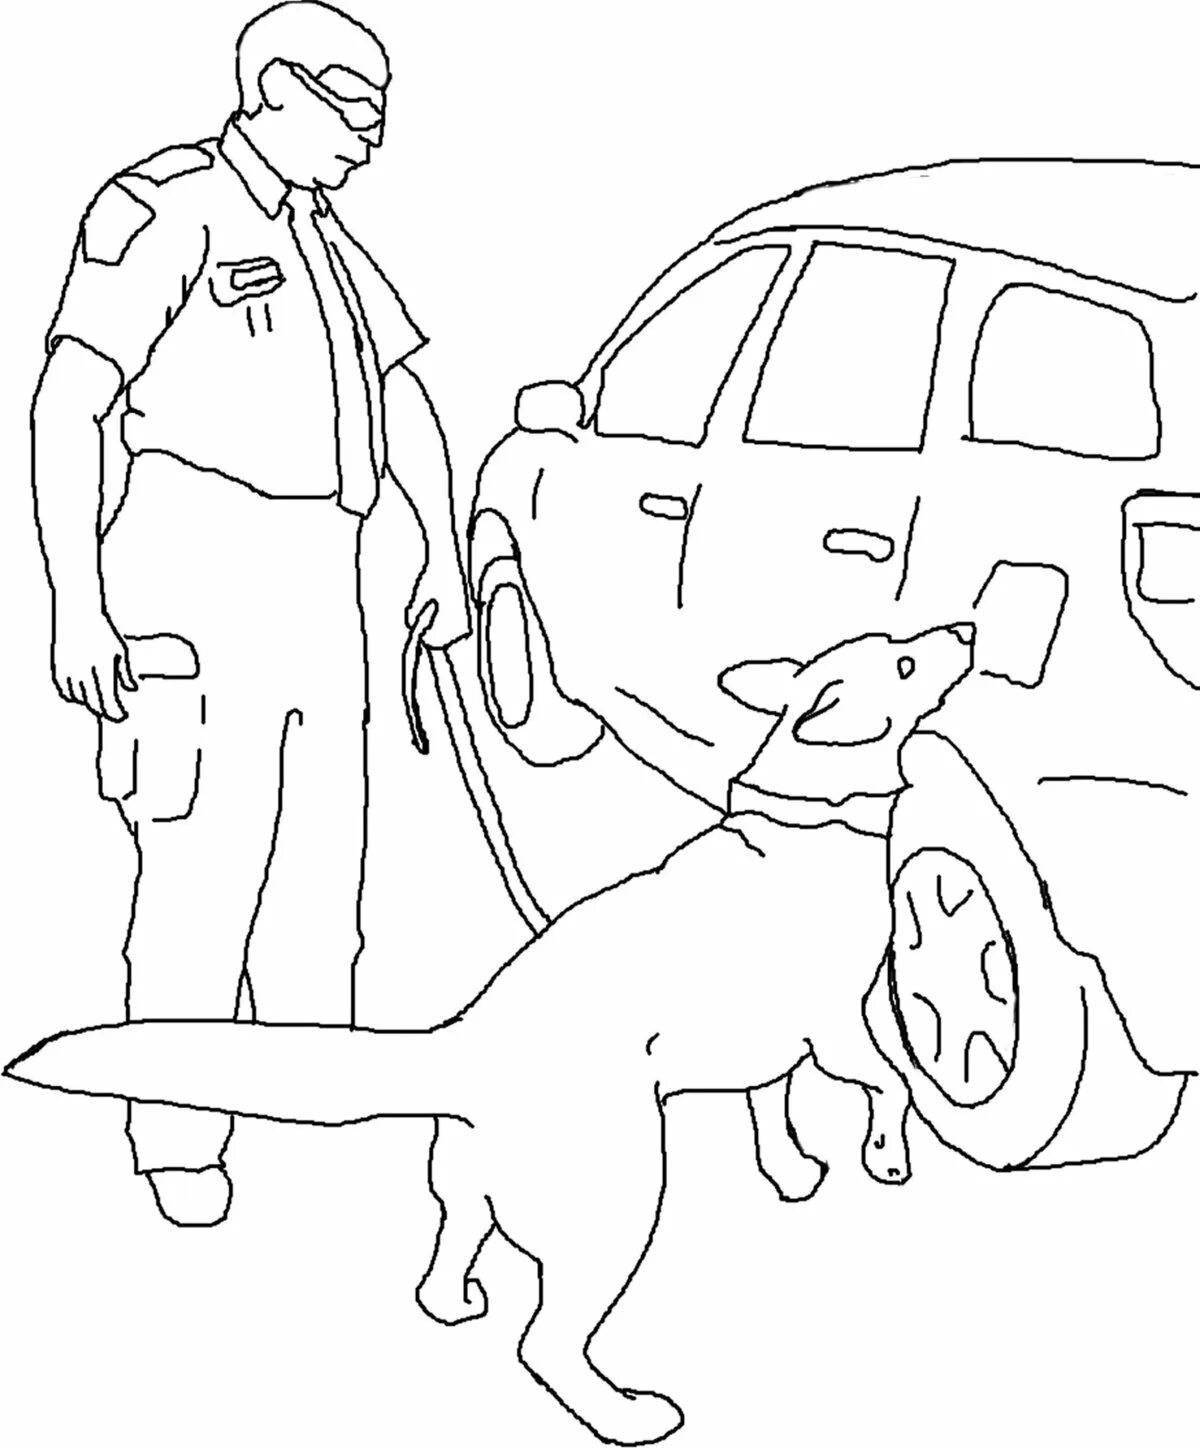 Joyful border guard with a dog for children